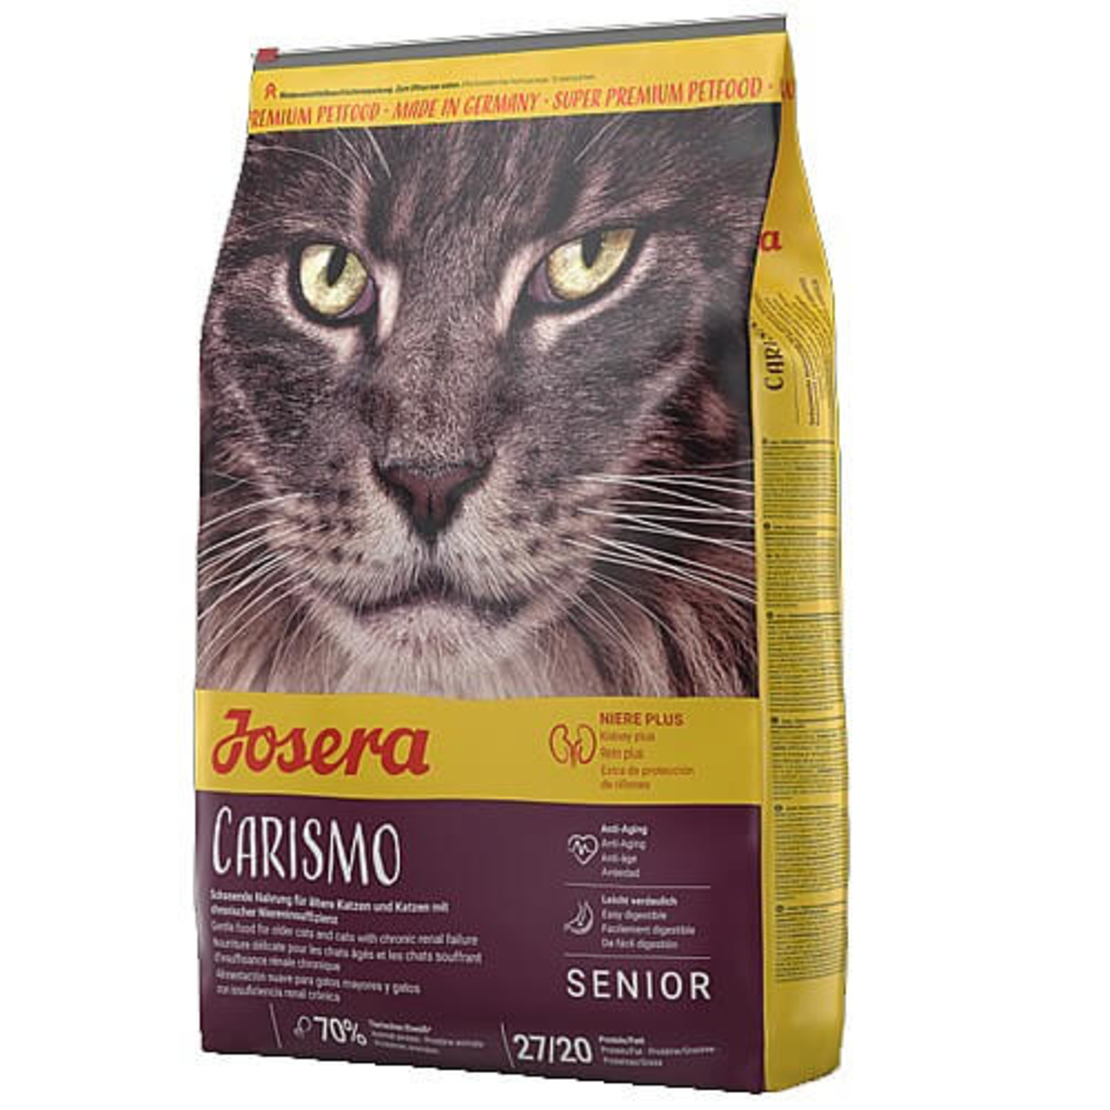 JOSERA CARISMO גוסרה מזון כריסמו מזון יבש לחתולים מבוגרים עם בעיות בכליות